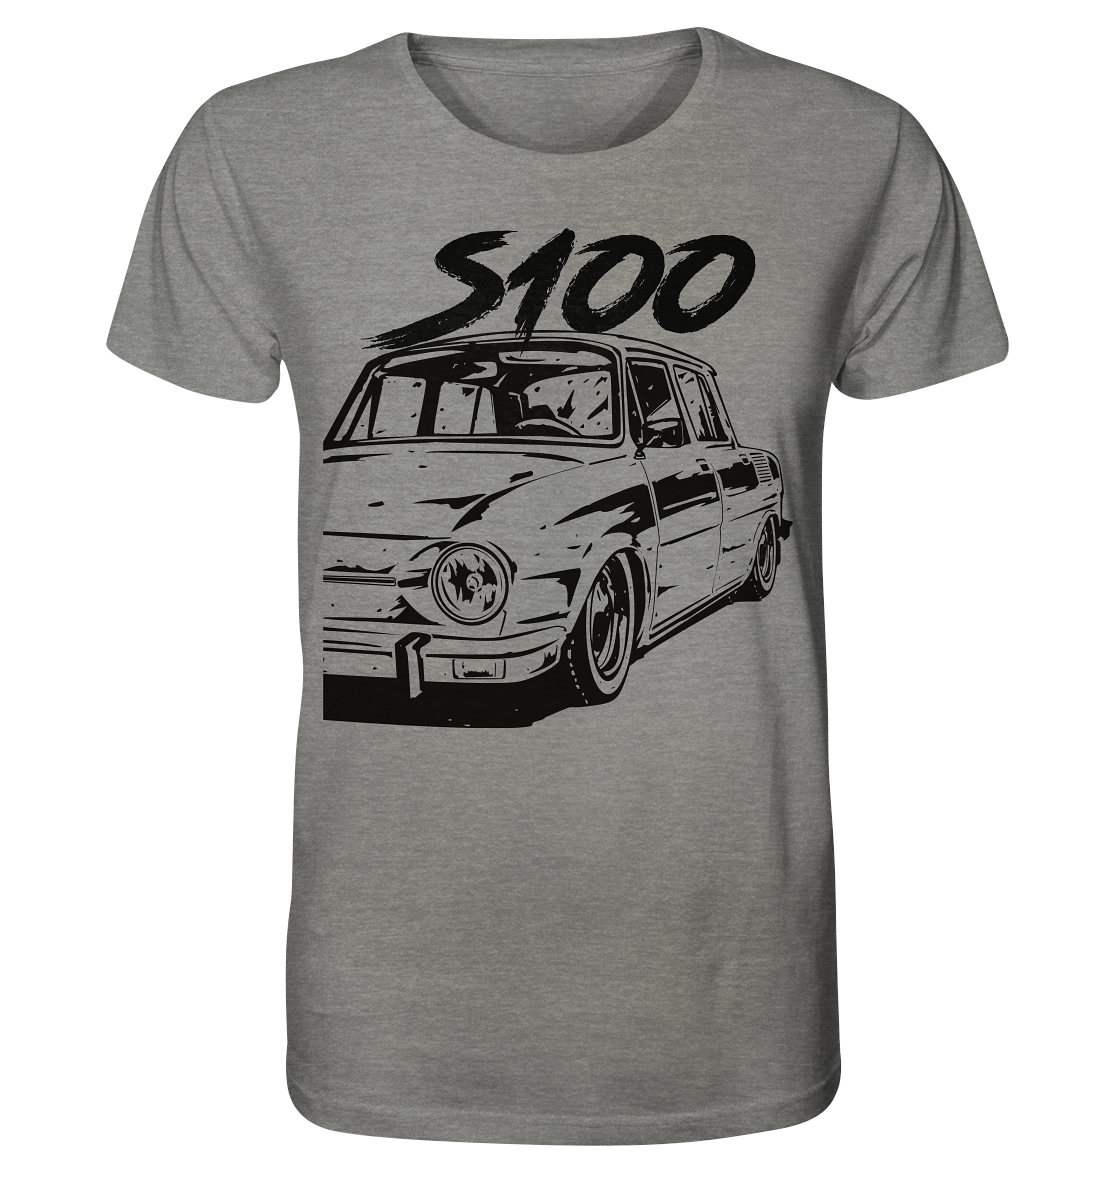 COD_SGKS100DIRTY - Organic Shirt (meliert)